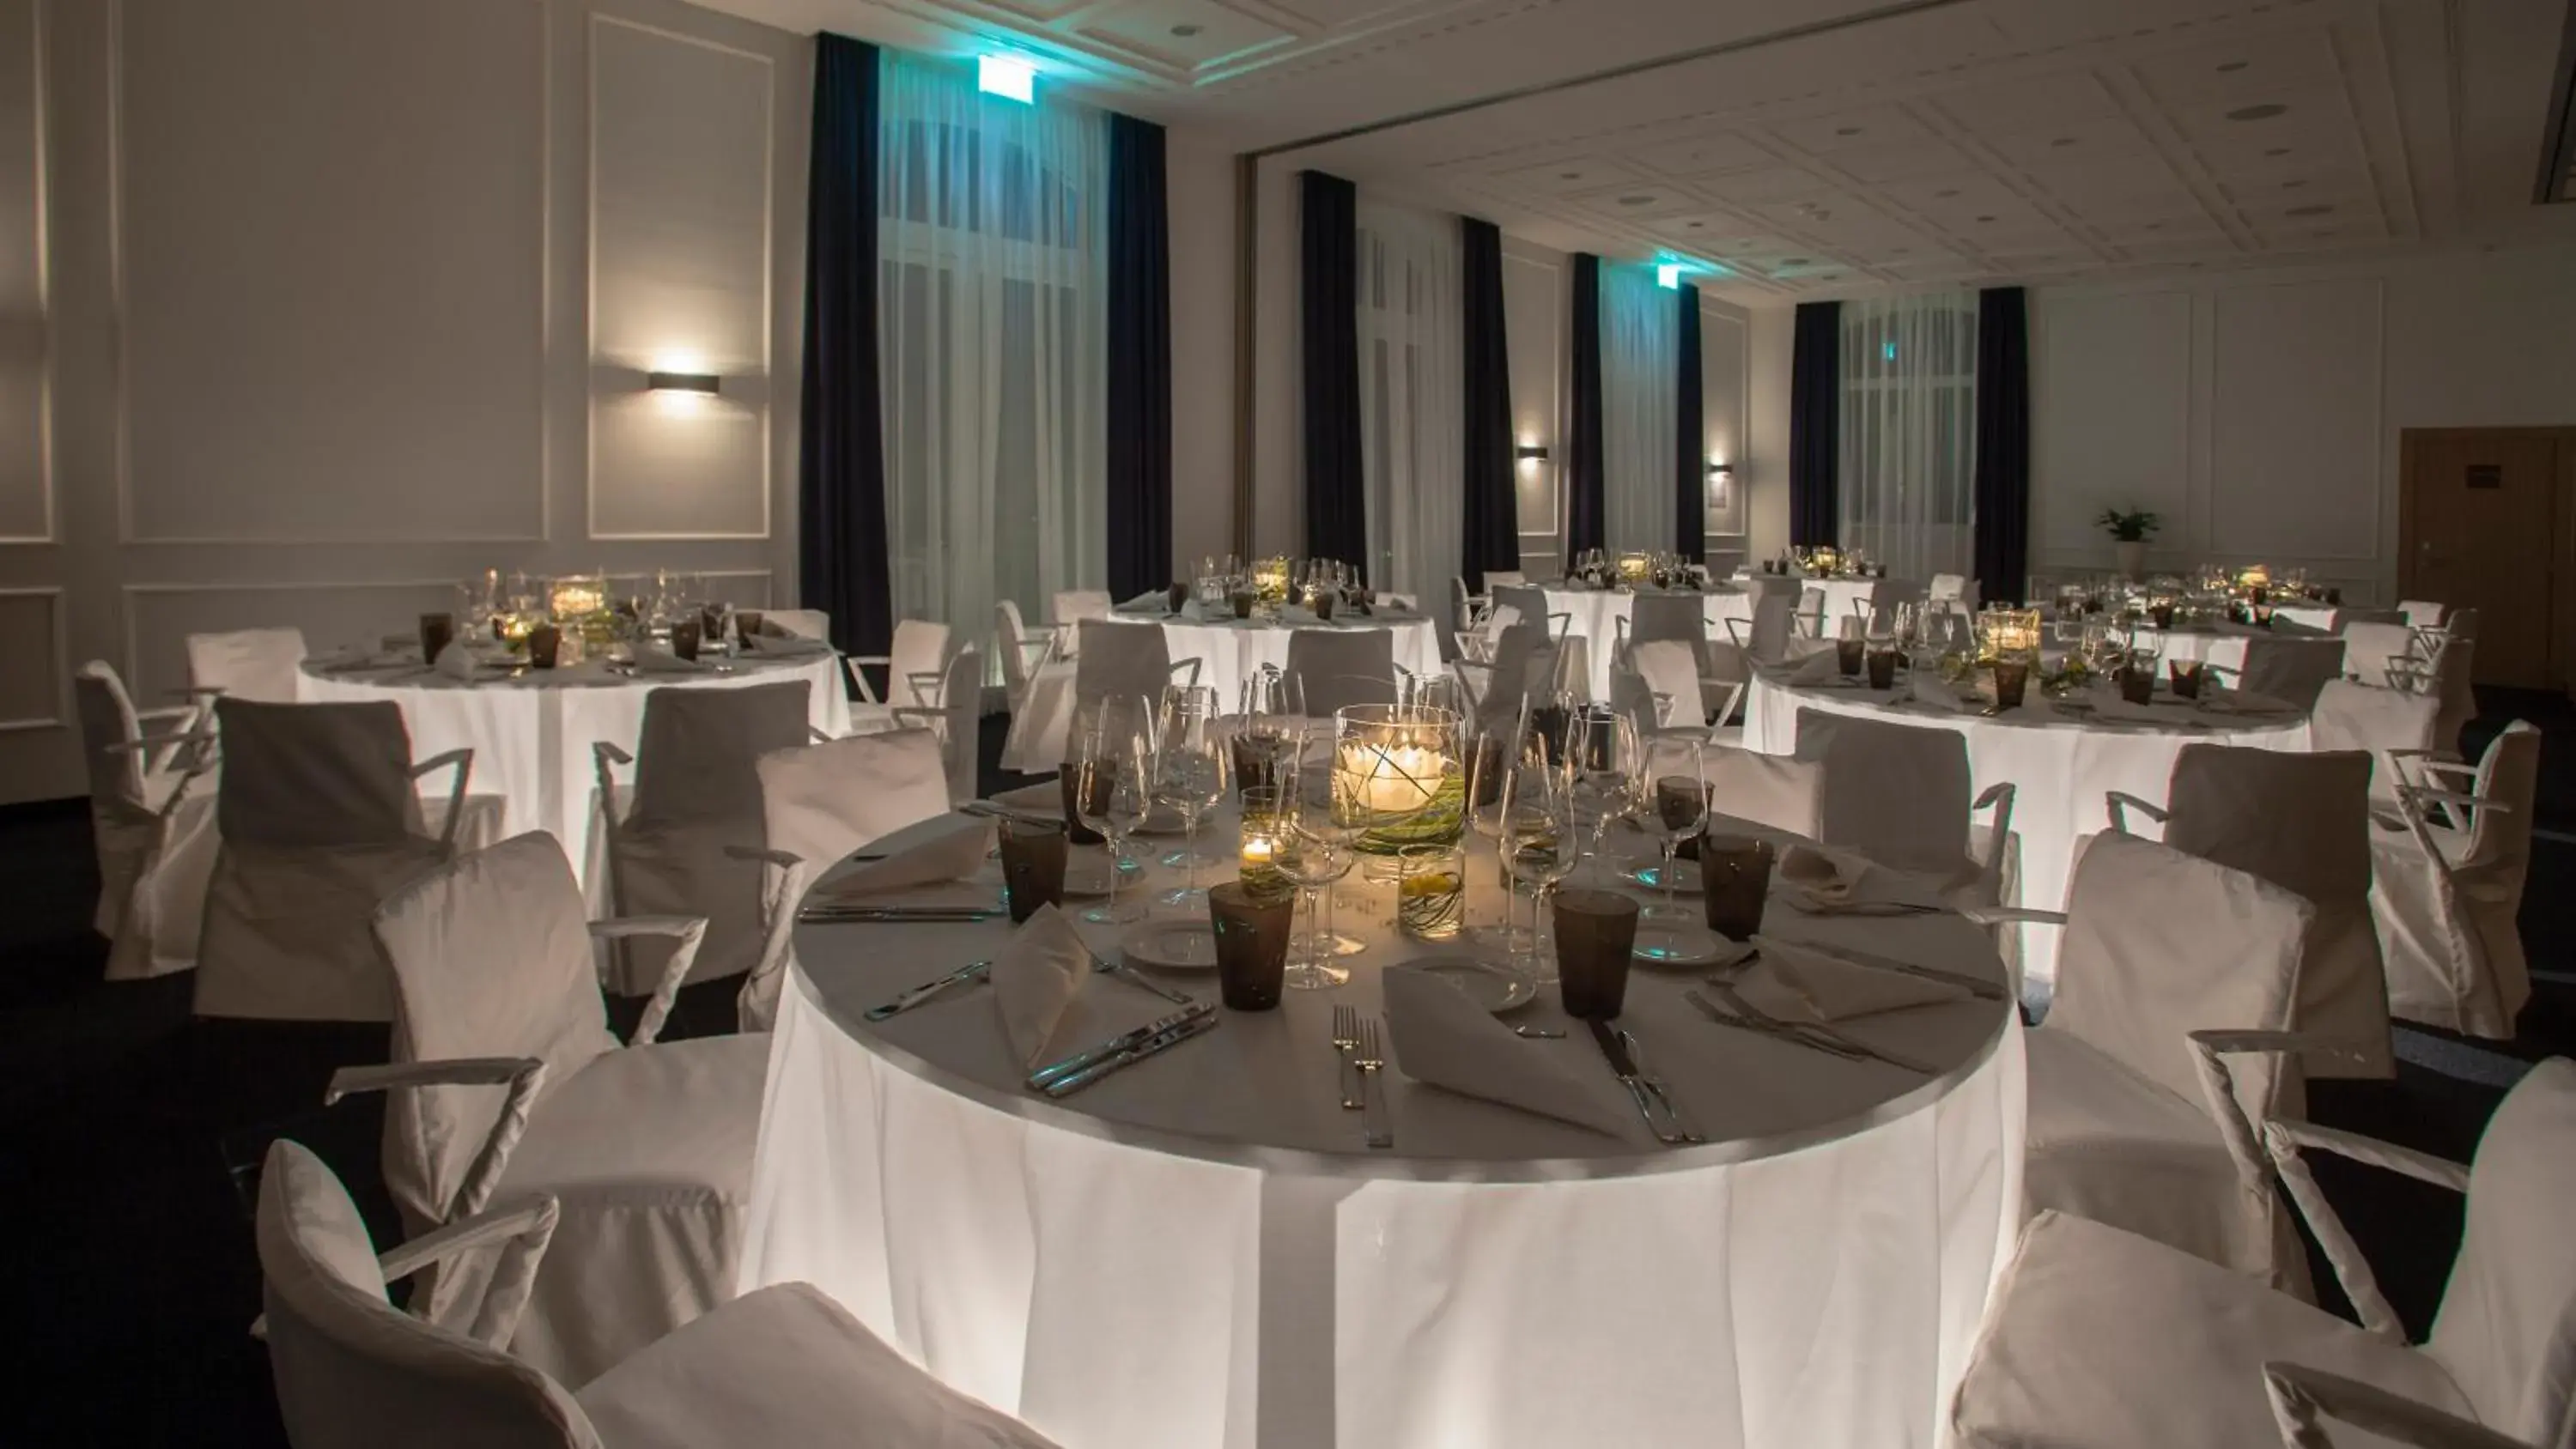 Banquet/Function facilities, Banquet Facilities in Kurhaus Cademario Hotel & DOT Spa - Ticino Hotels Group